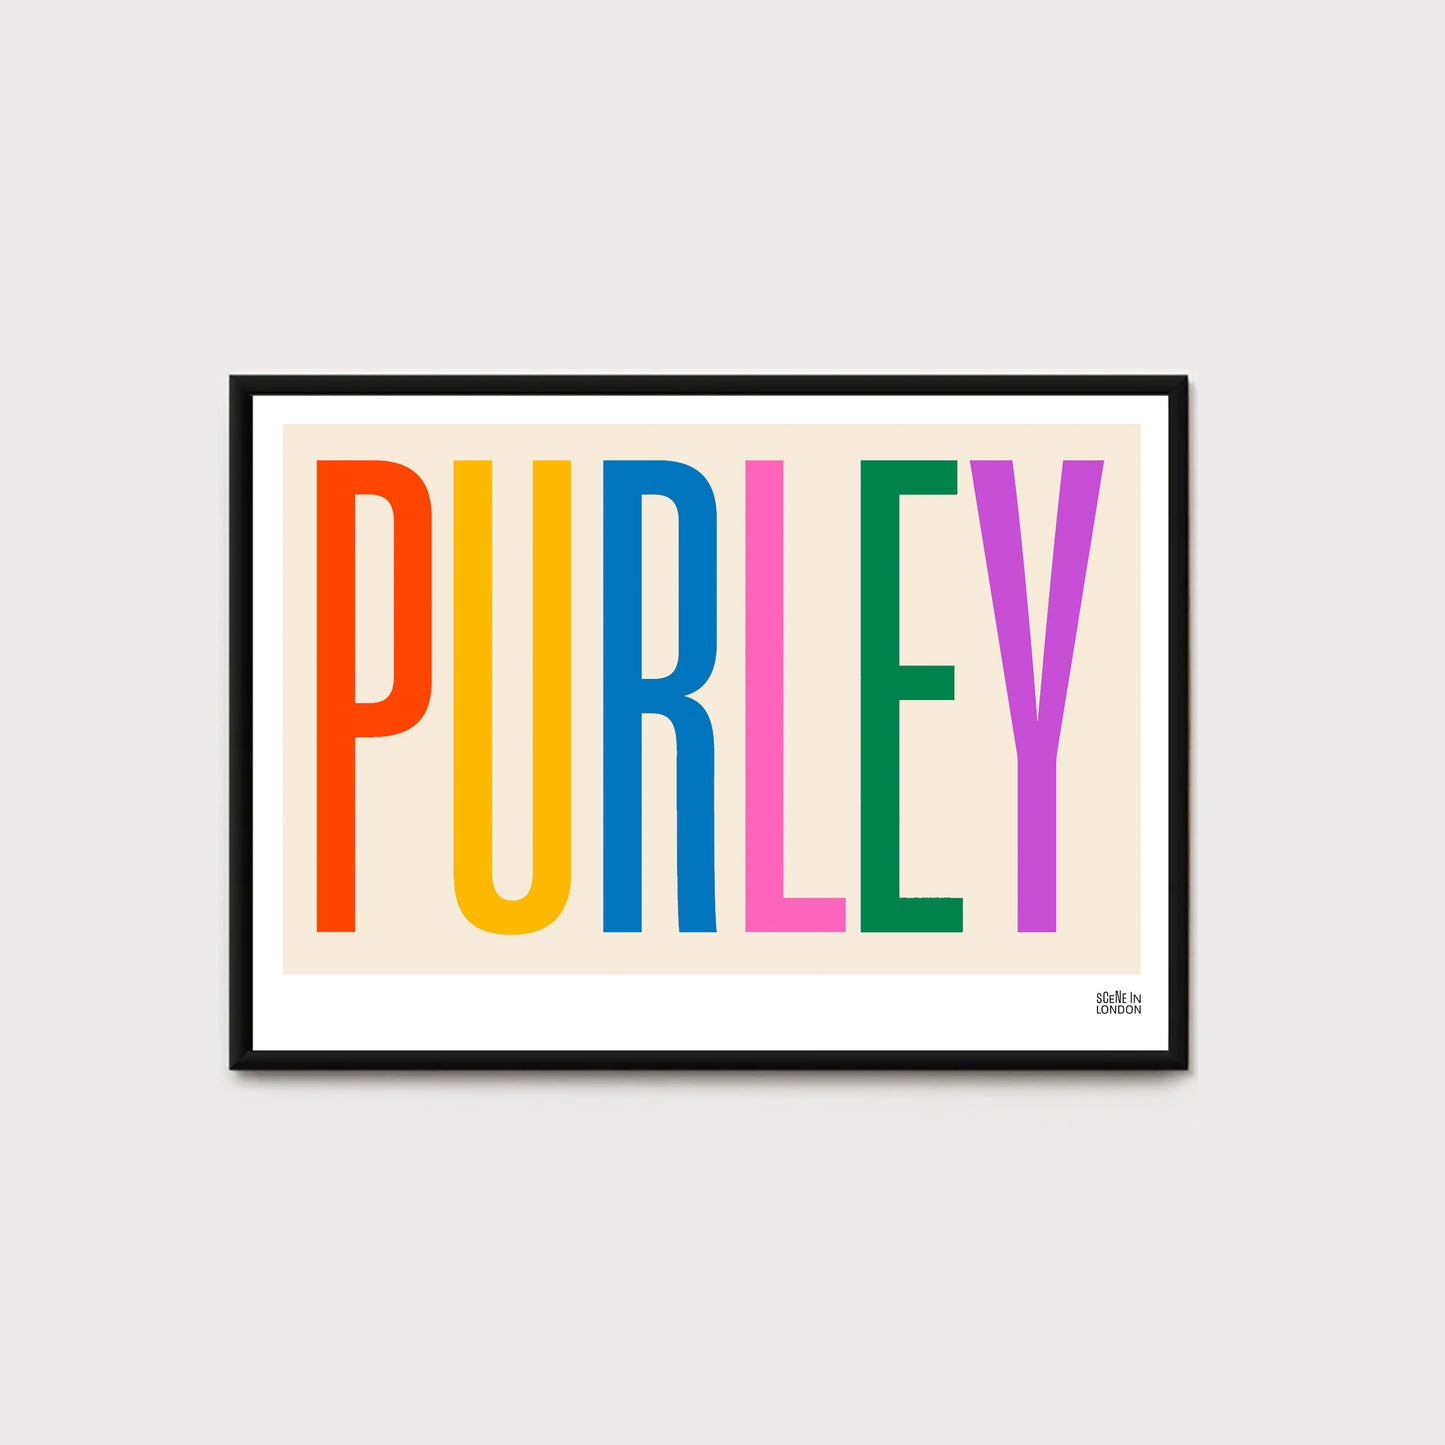 Purley Croydon art print